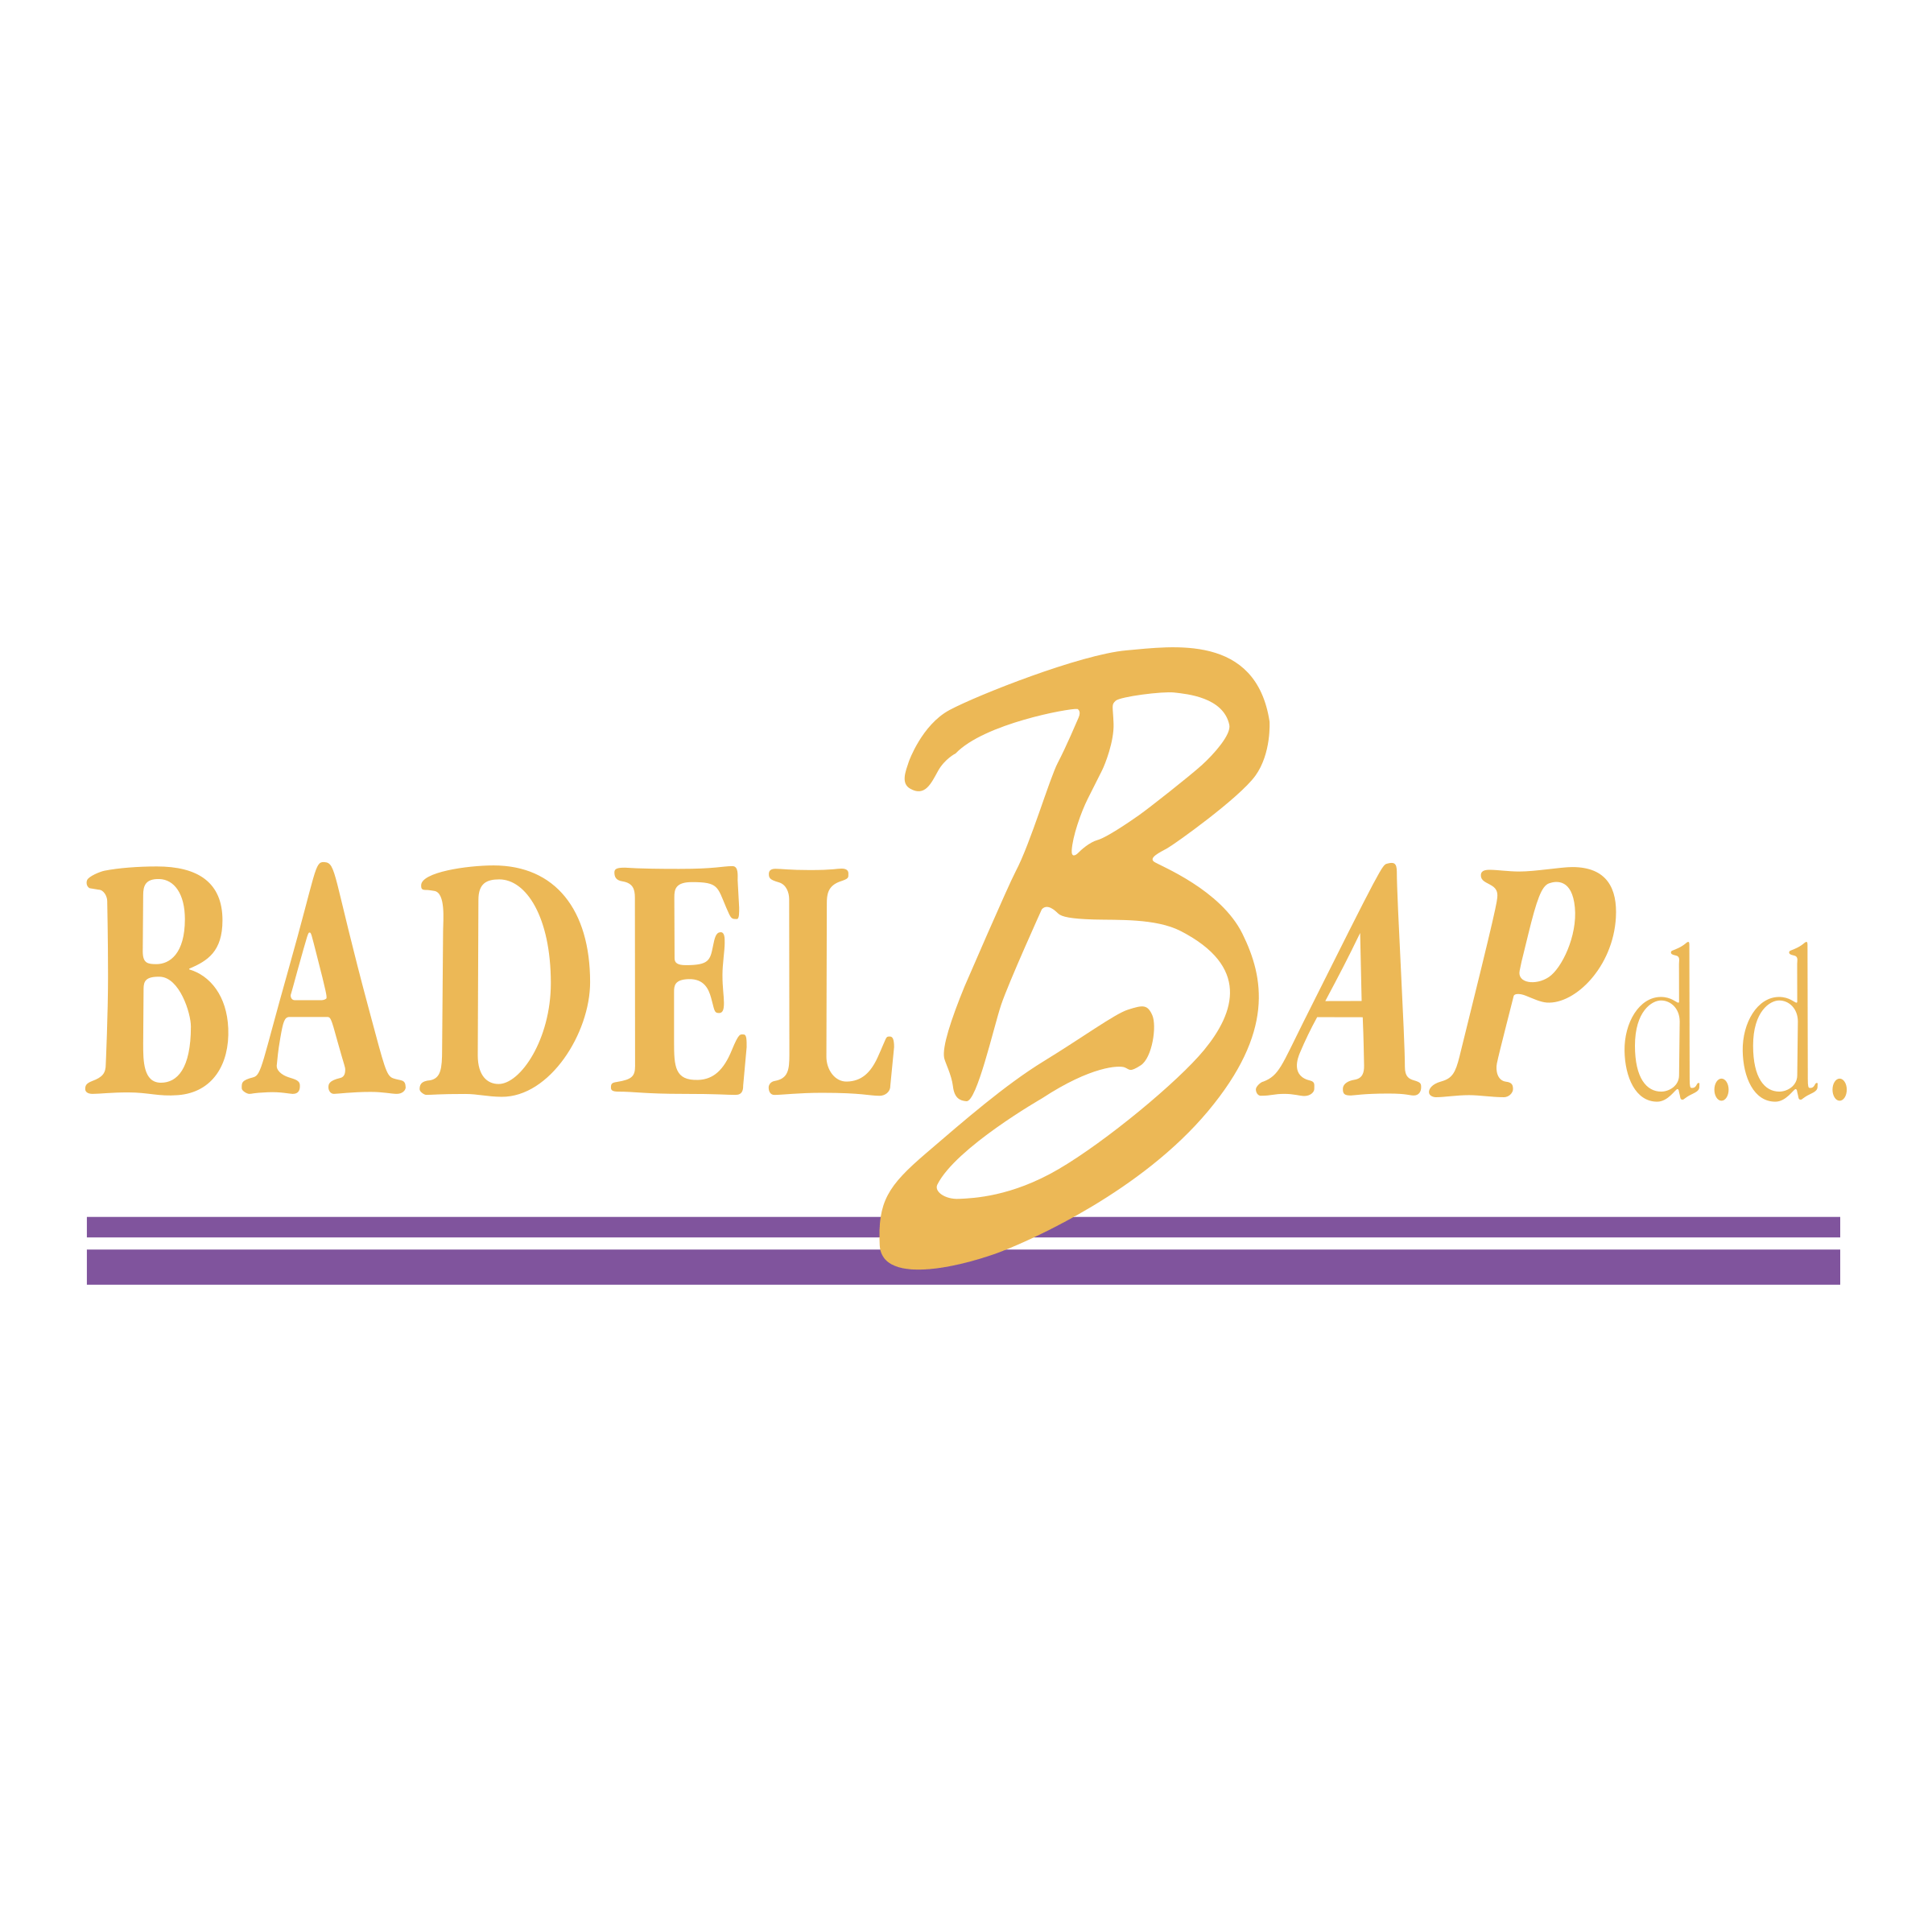 Bap Logo - Badel BAP Logo PNG Transparent & SVG Vector - Freebie Supply